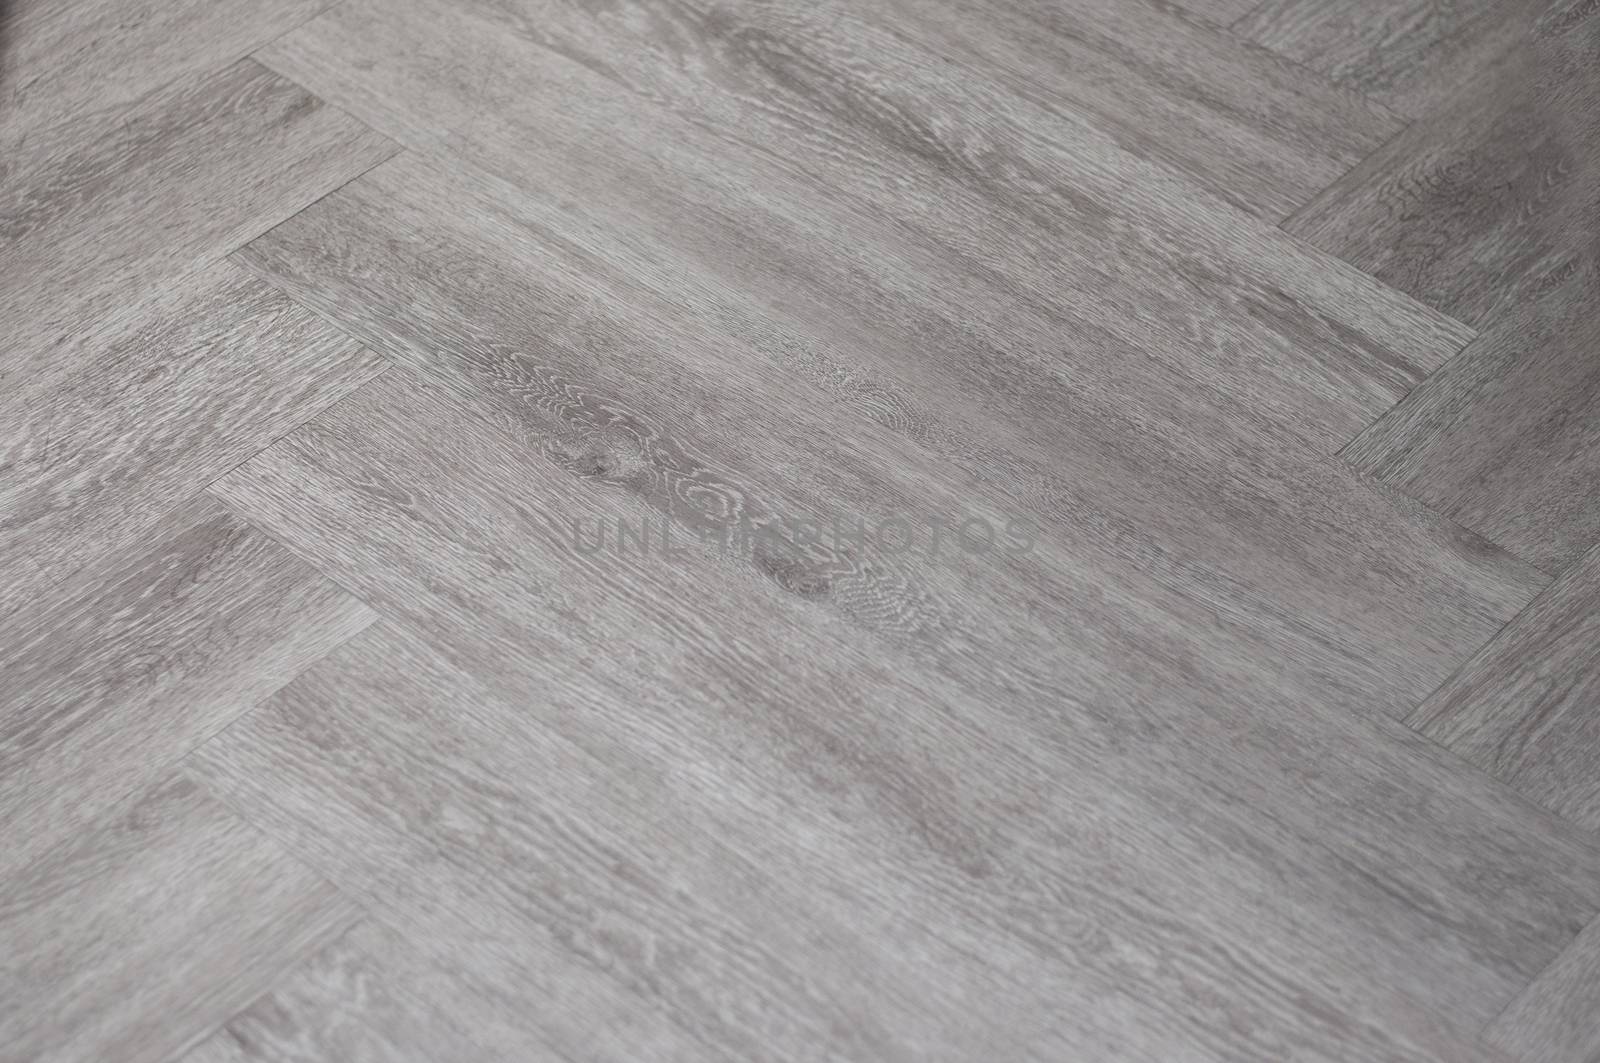 Wood pattern installing floor tile.  by Kingsman911